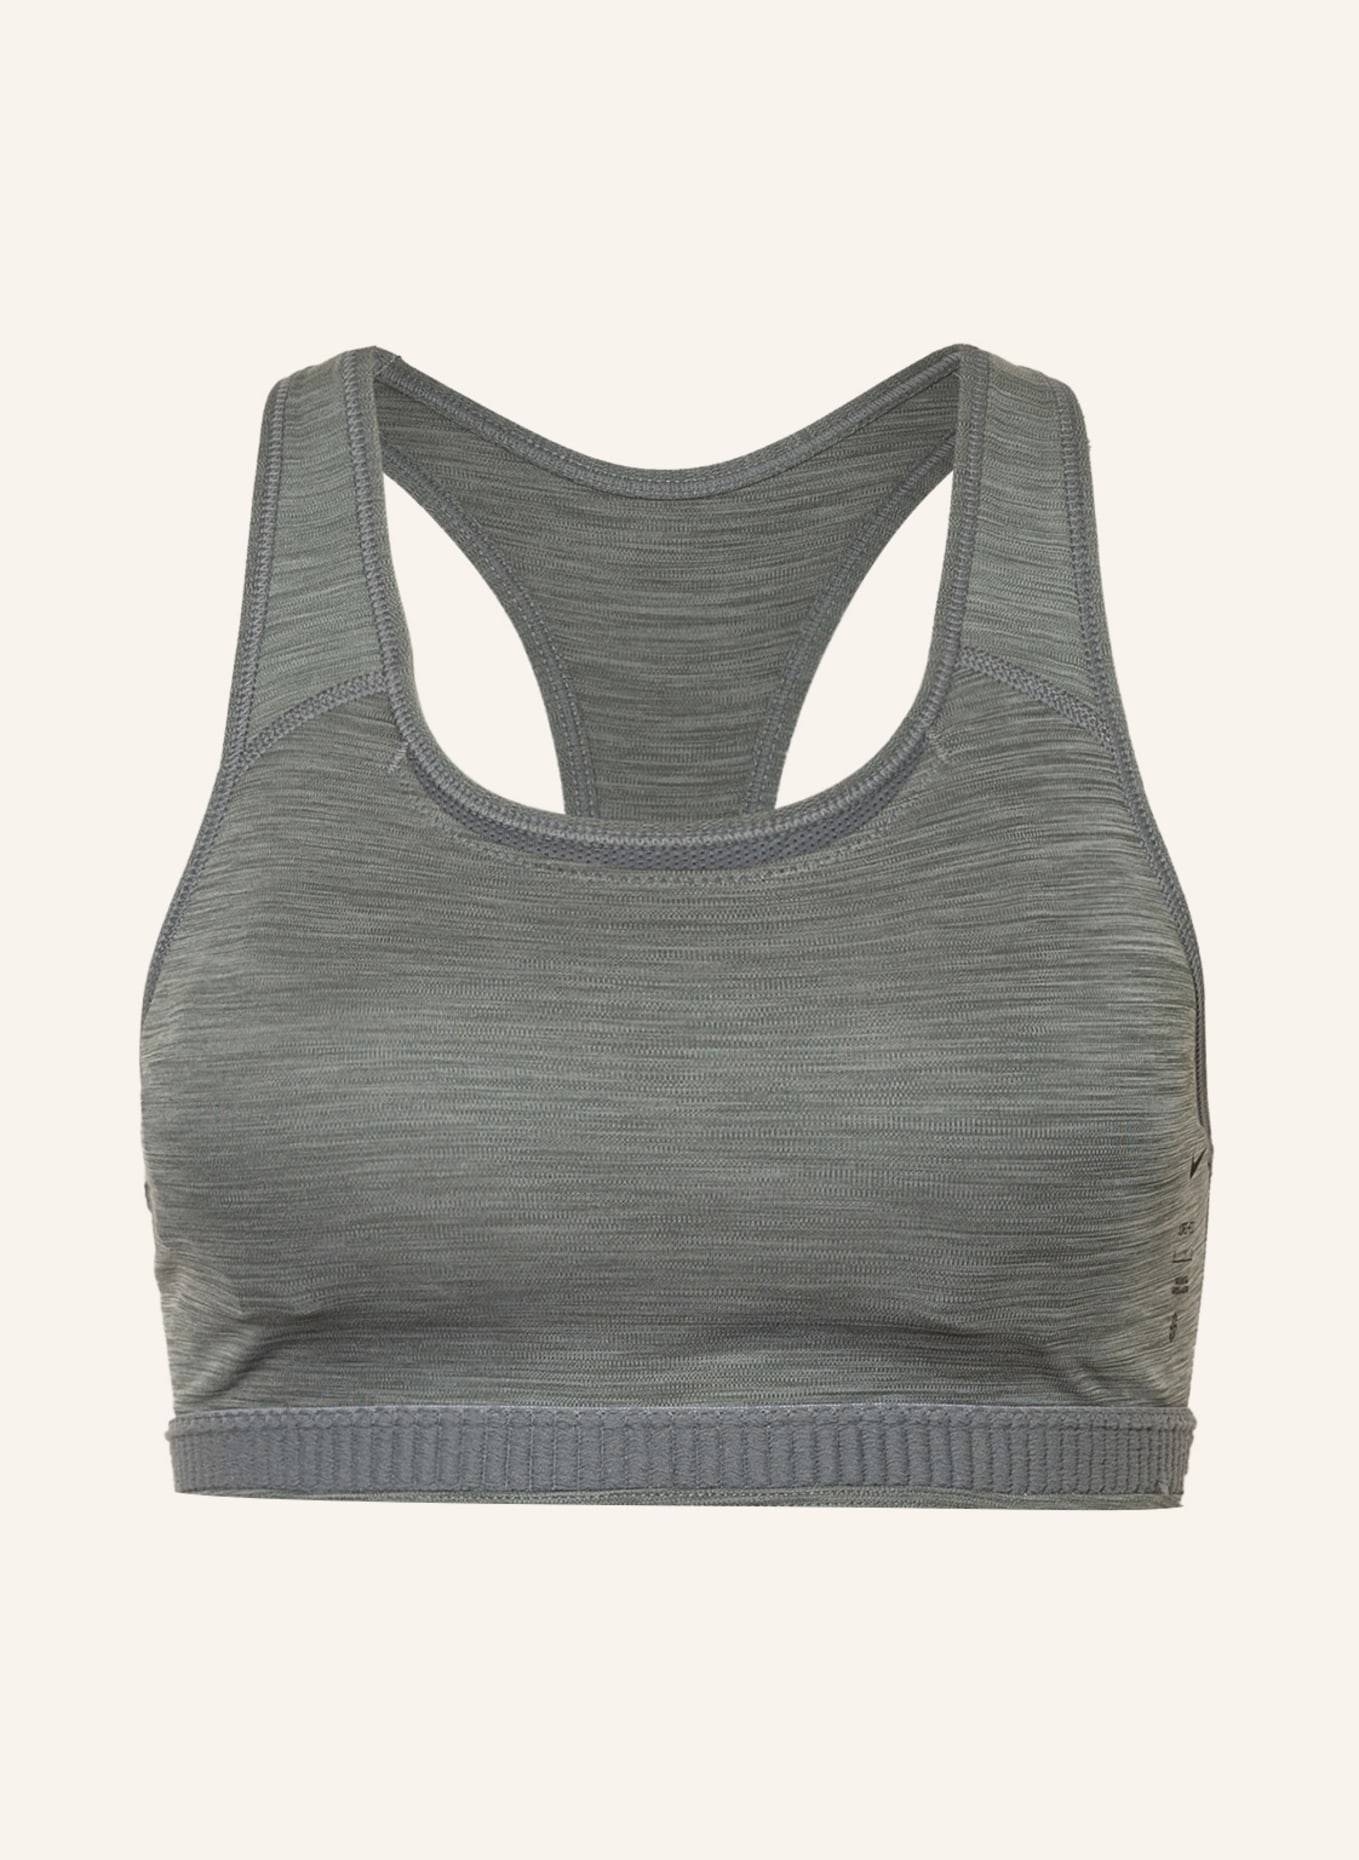 Nike Sports bra SWOOSH in gray